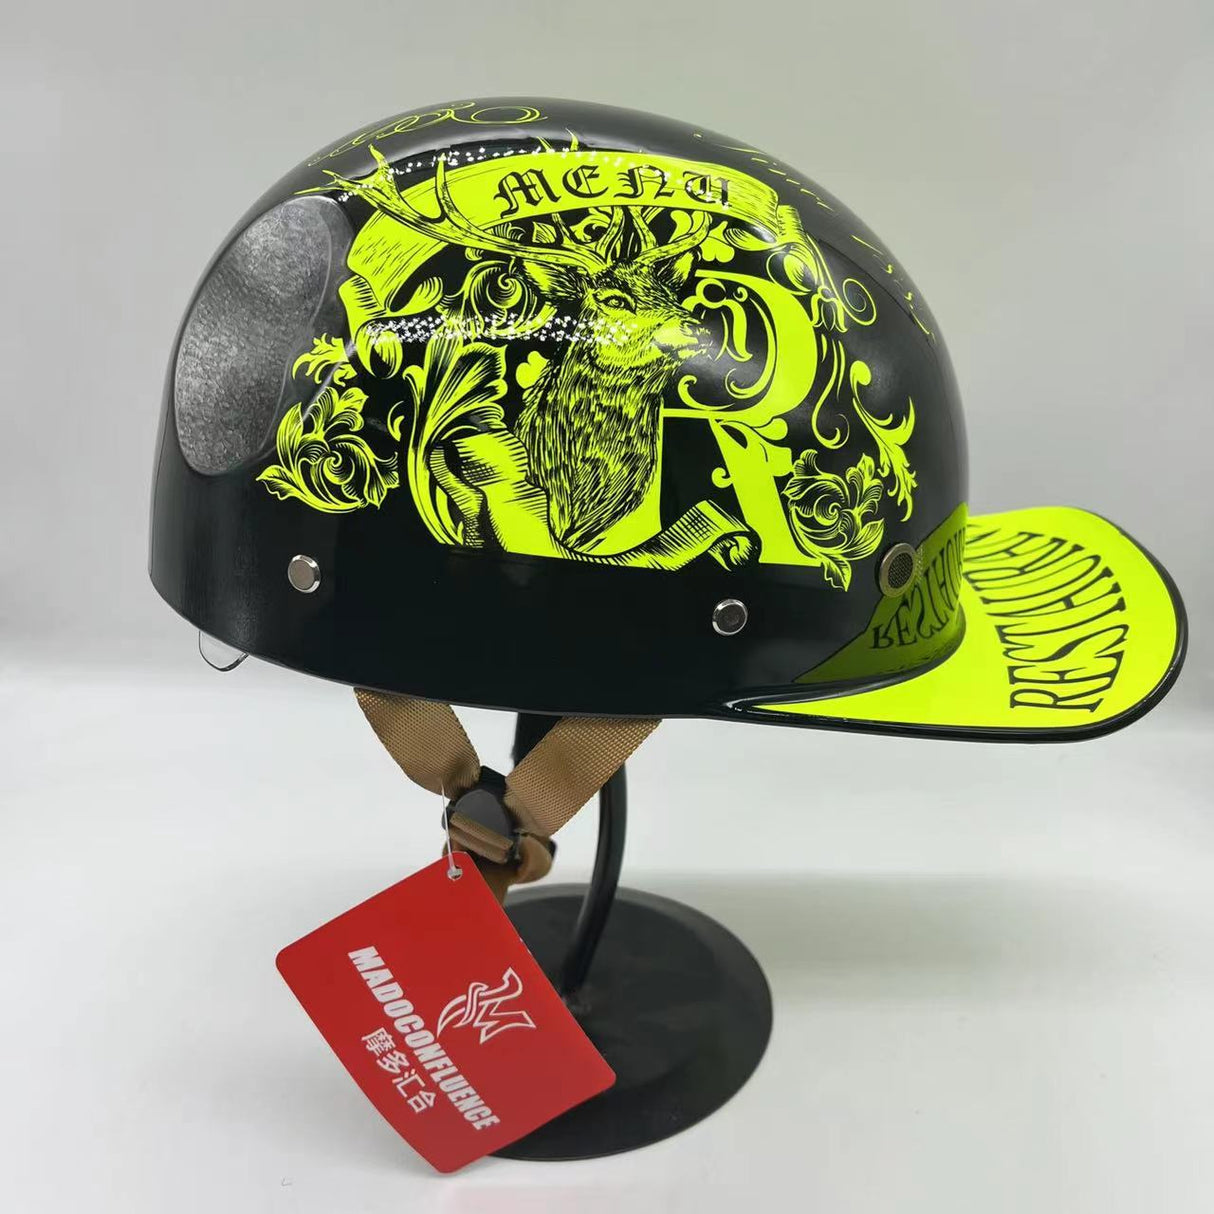 Backwards Baseball Cap Motorcycle Helmet : r/ofcoursethatsathing